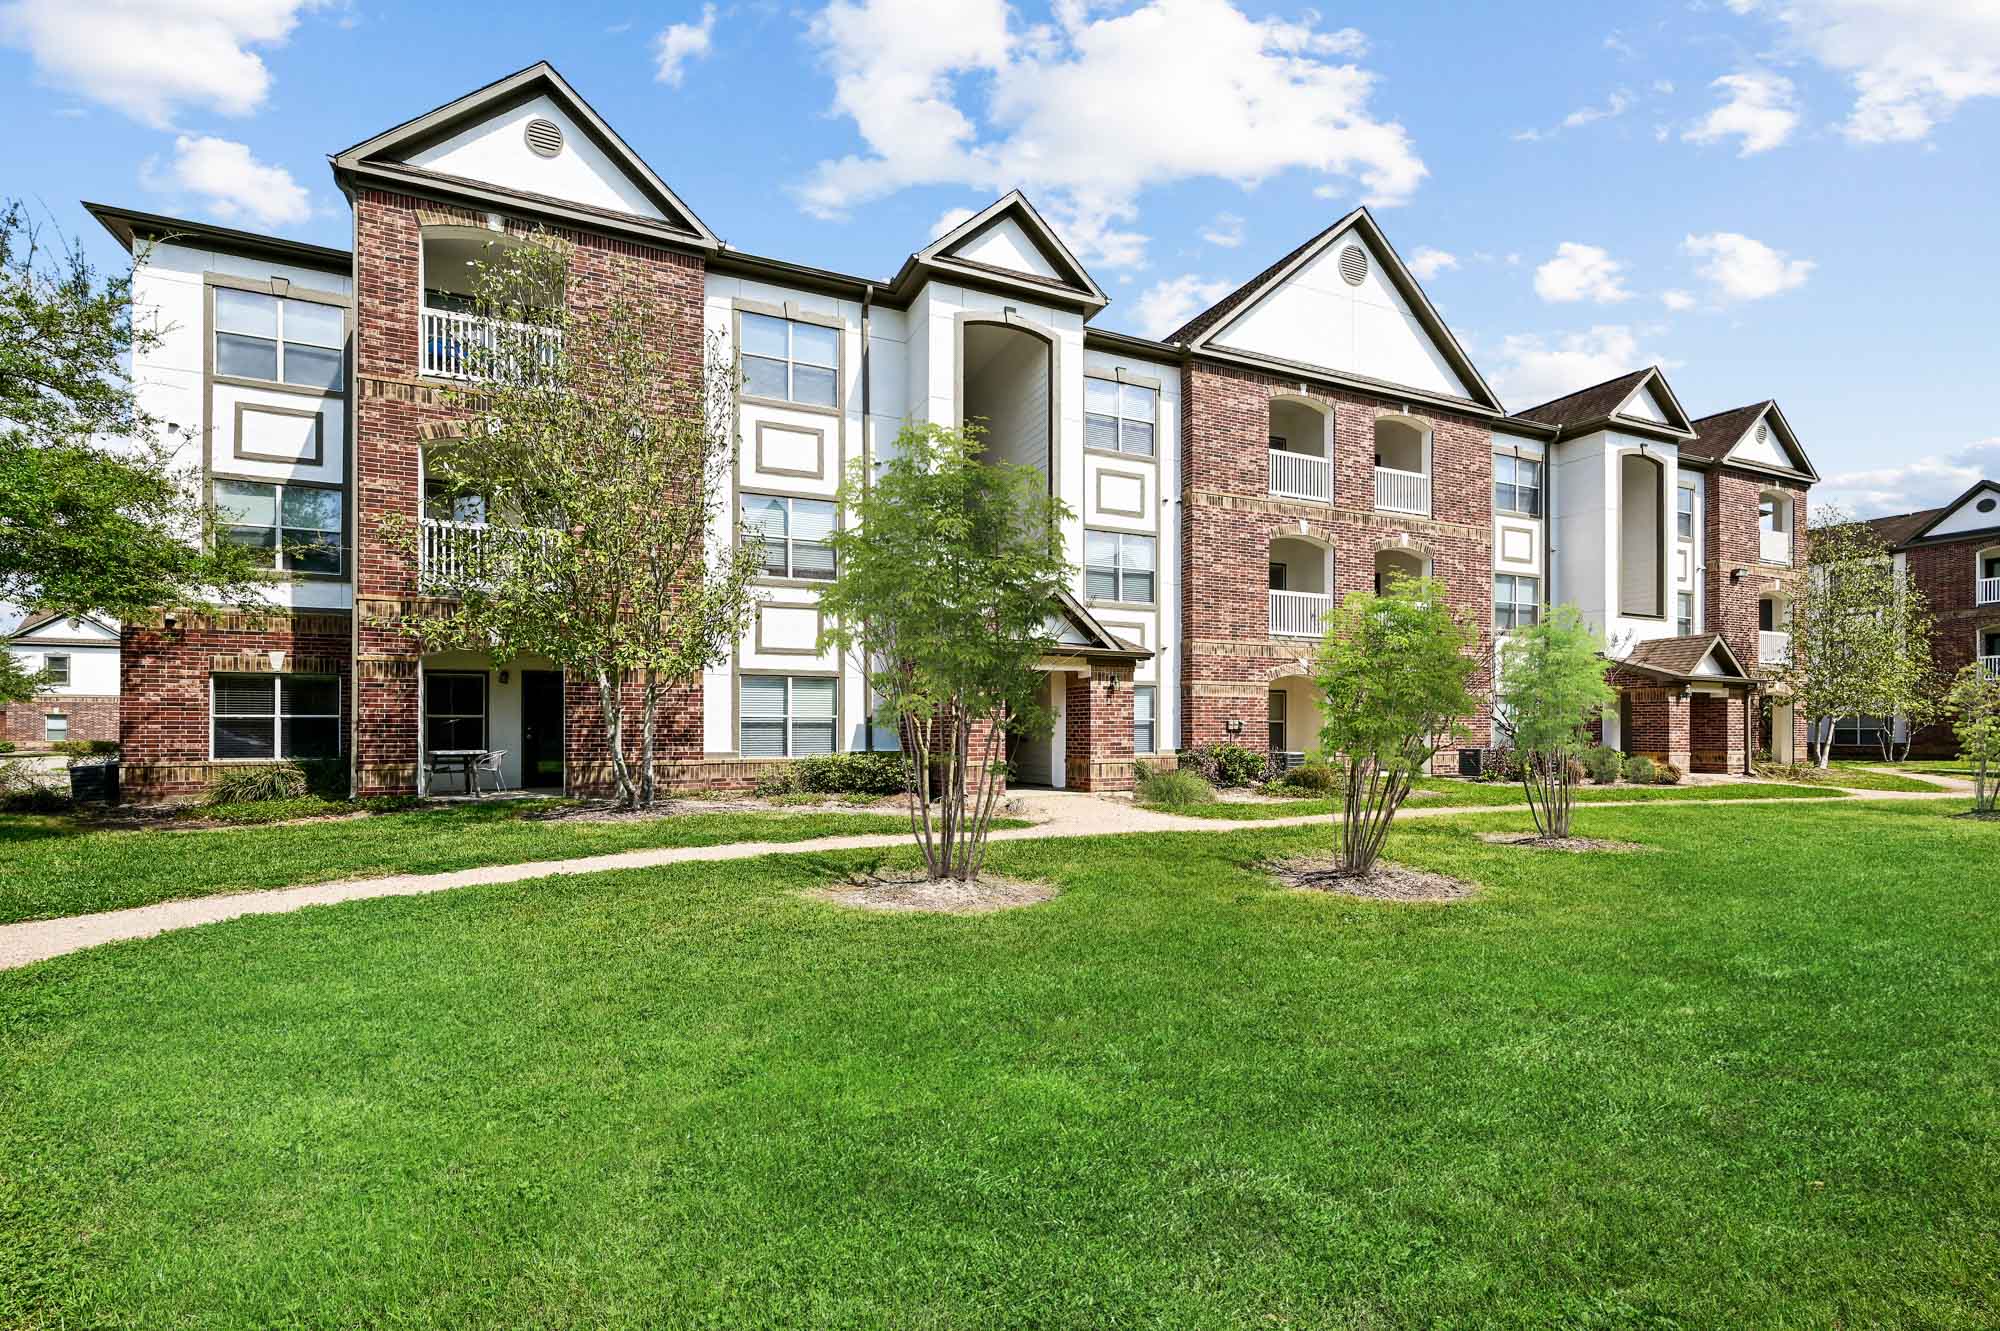 Residences at The Villas at Shadow Creek apartments in Houston, TX.